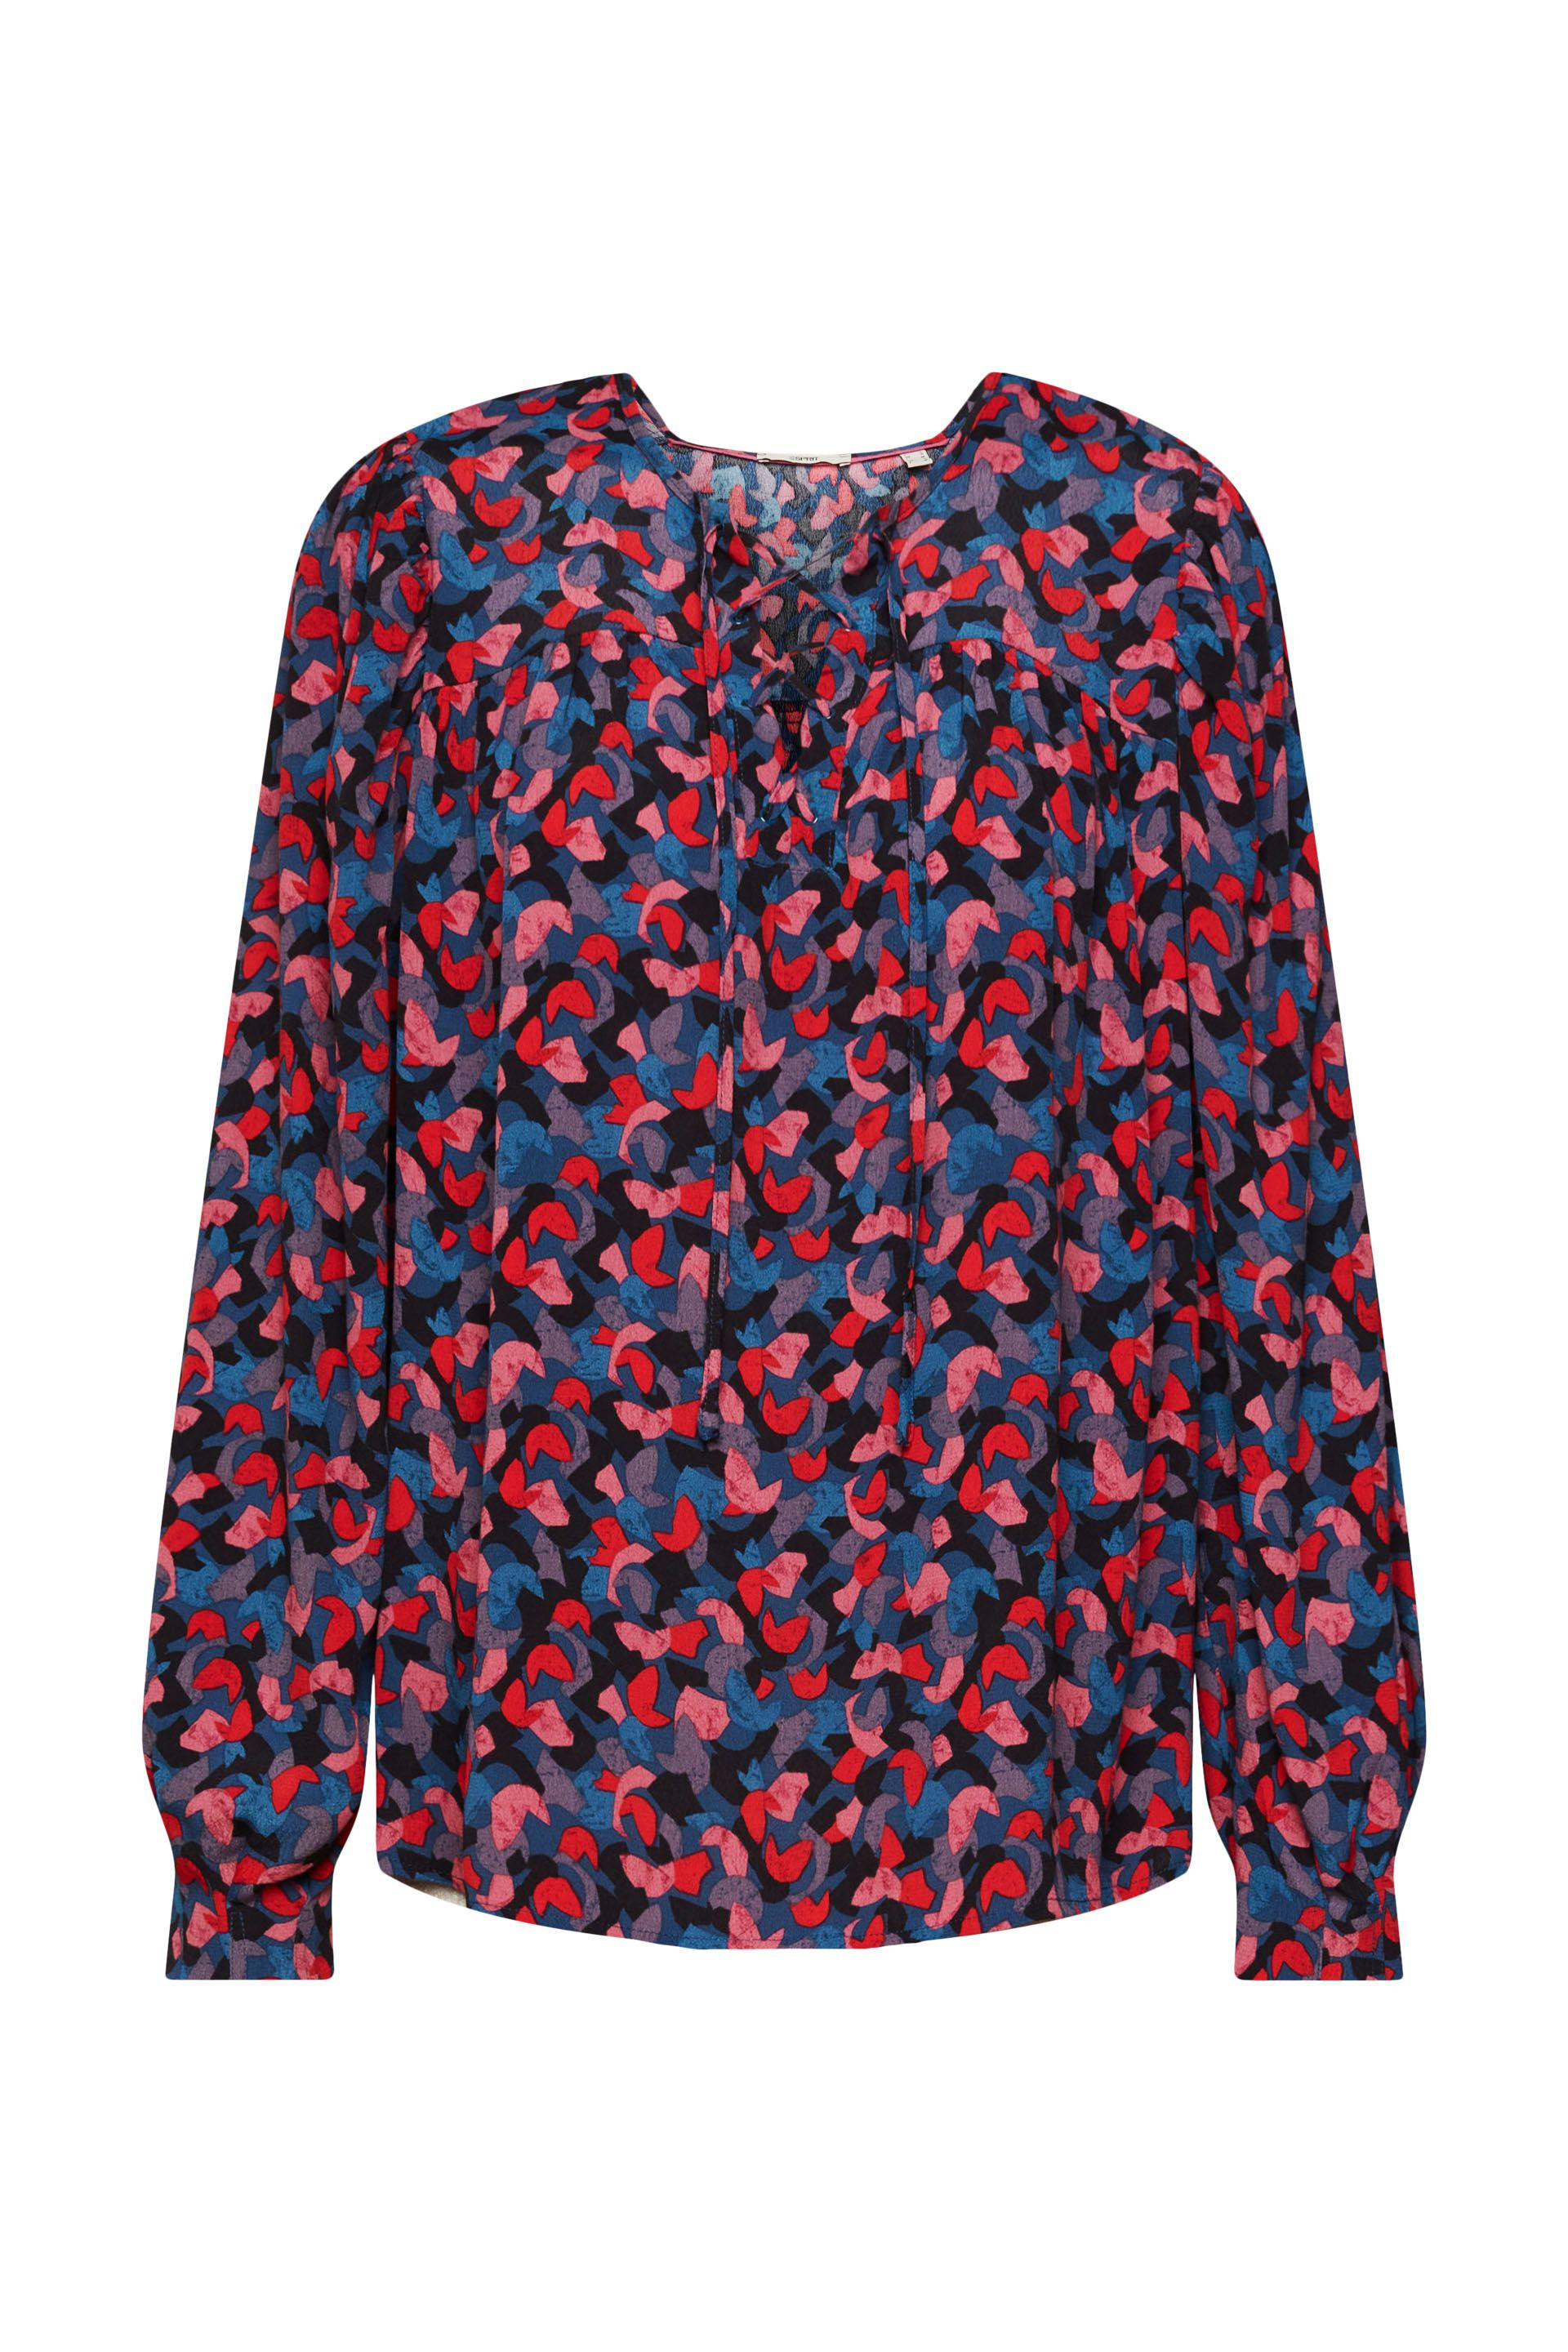 Esprit - Patterned blouse, Multicolor, large image number 0